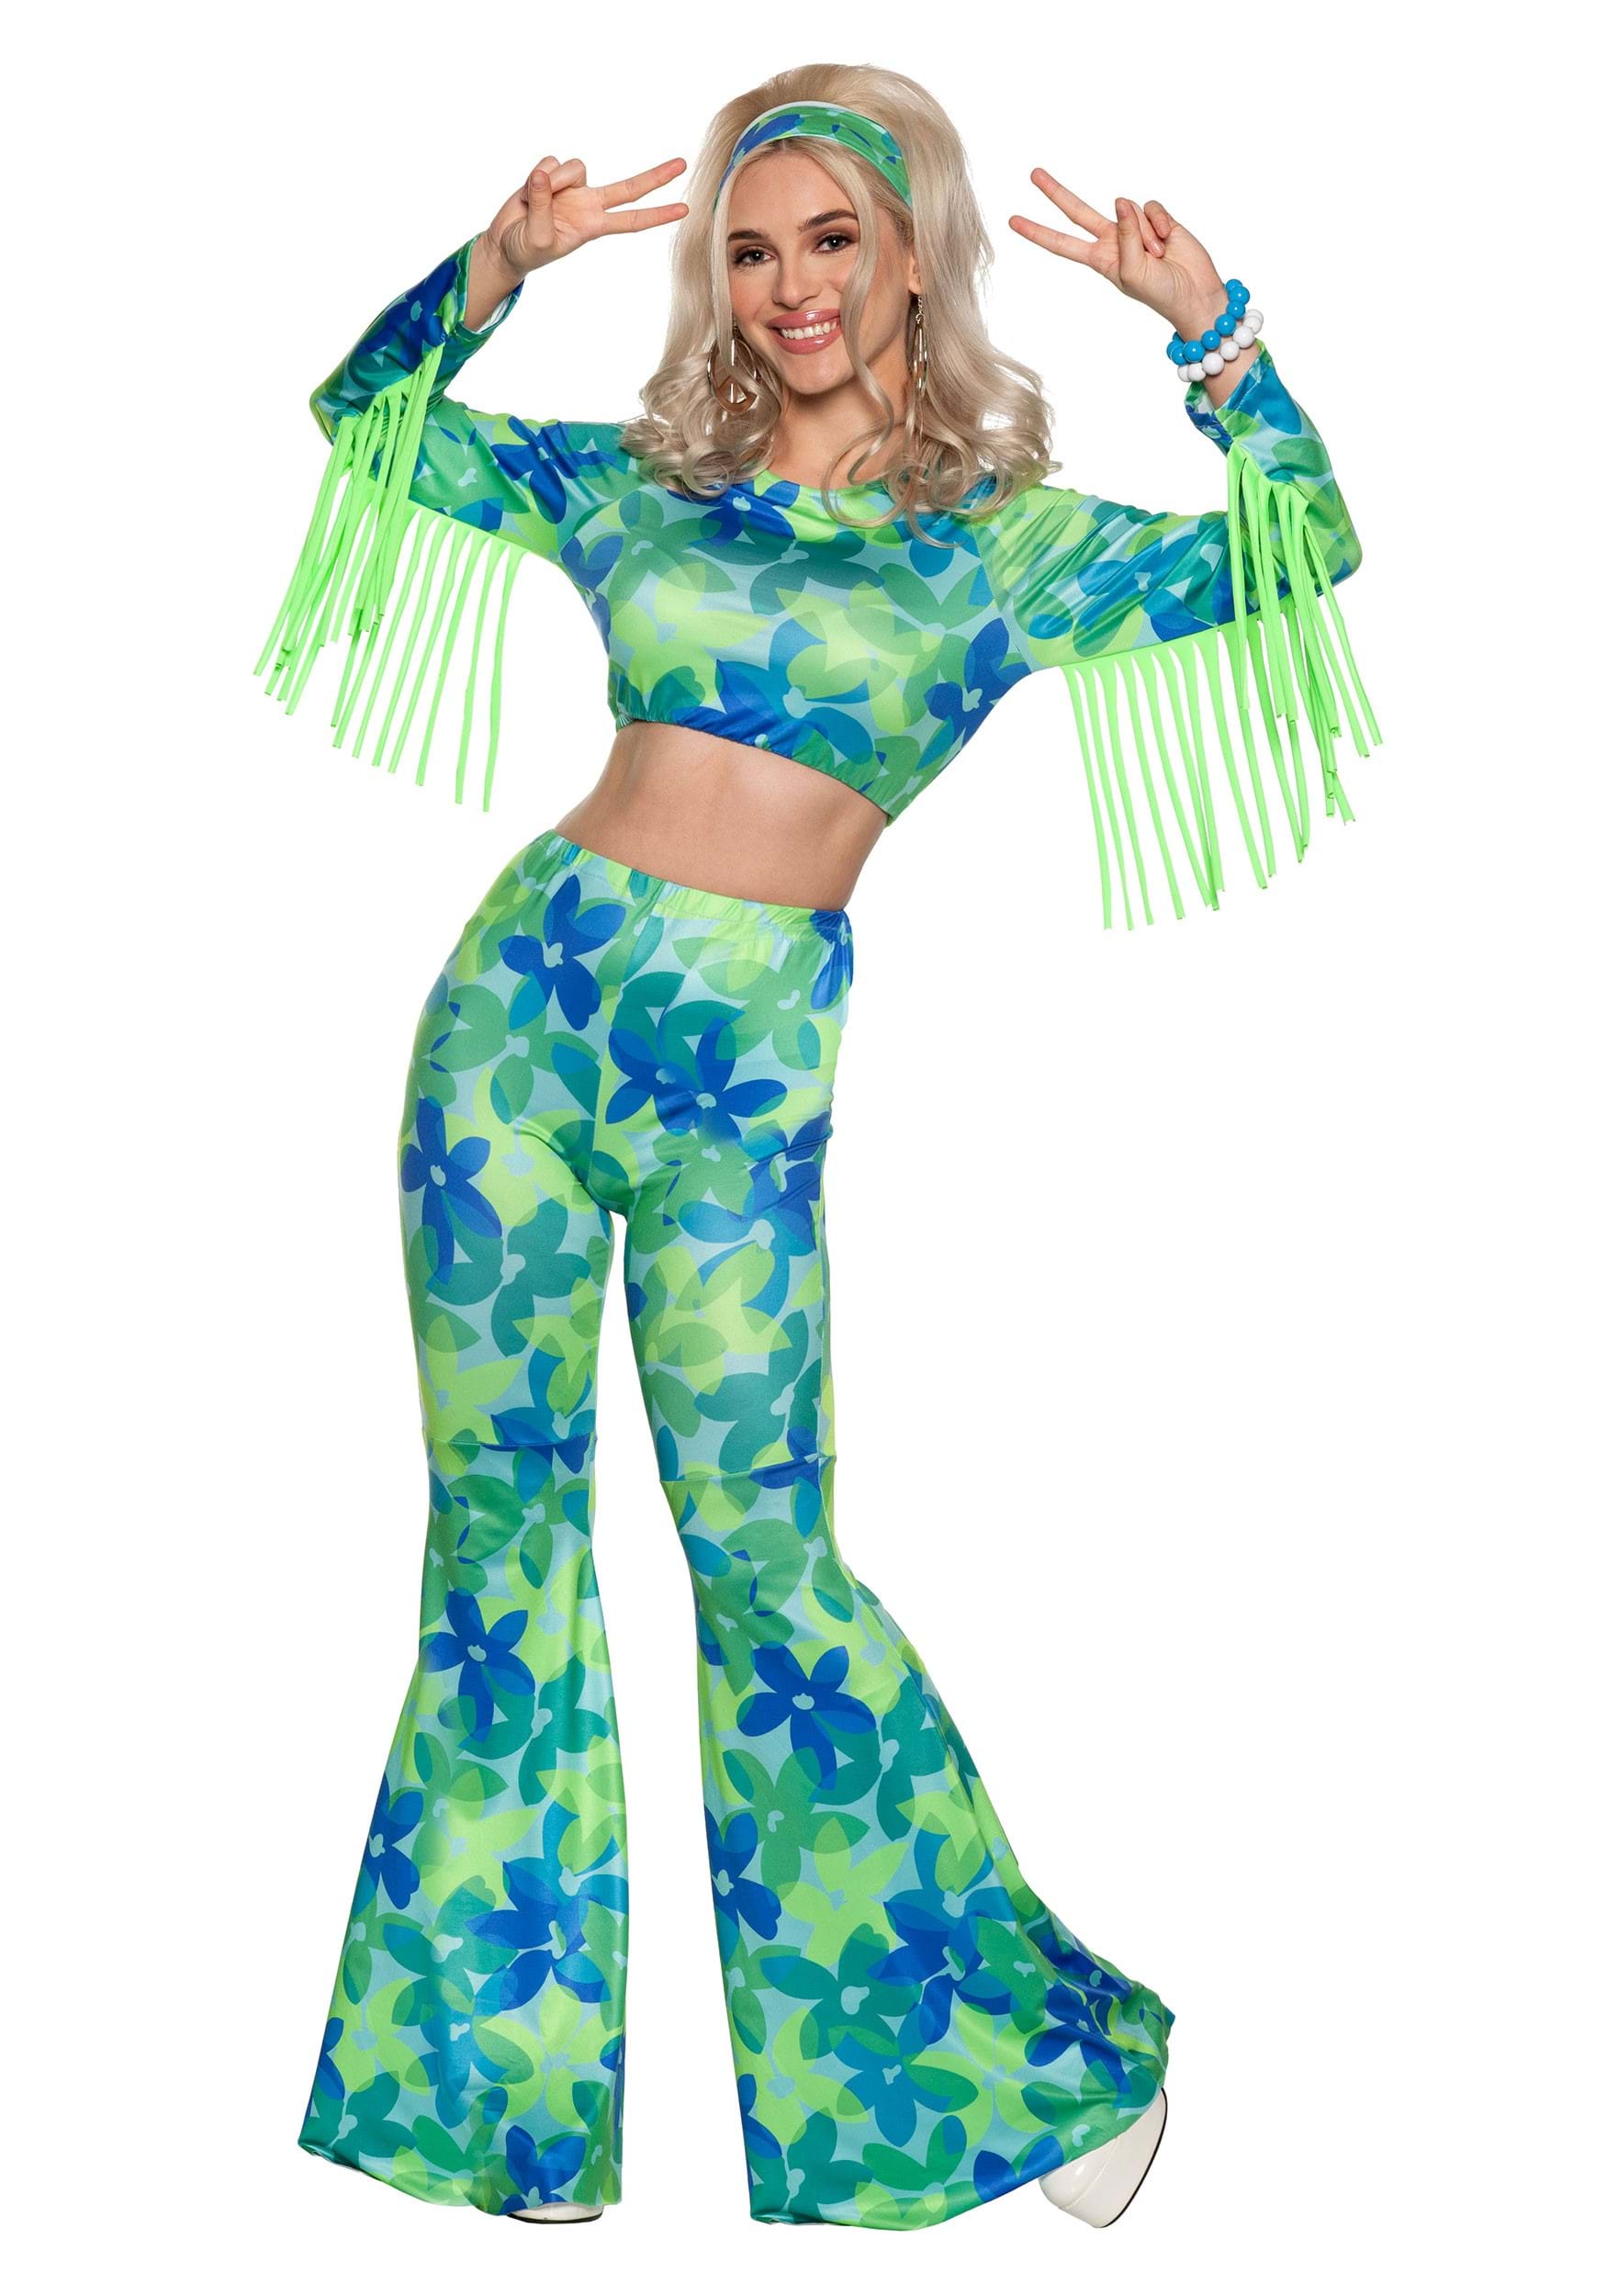 60s Costumes: Hippie, Go Go Dancer, Flower Child, Mod Style Green and Blue Flower Power Costume for Women  Hippie Costumes $34.99 AT vintagedancer.com